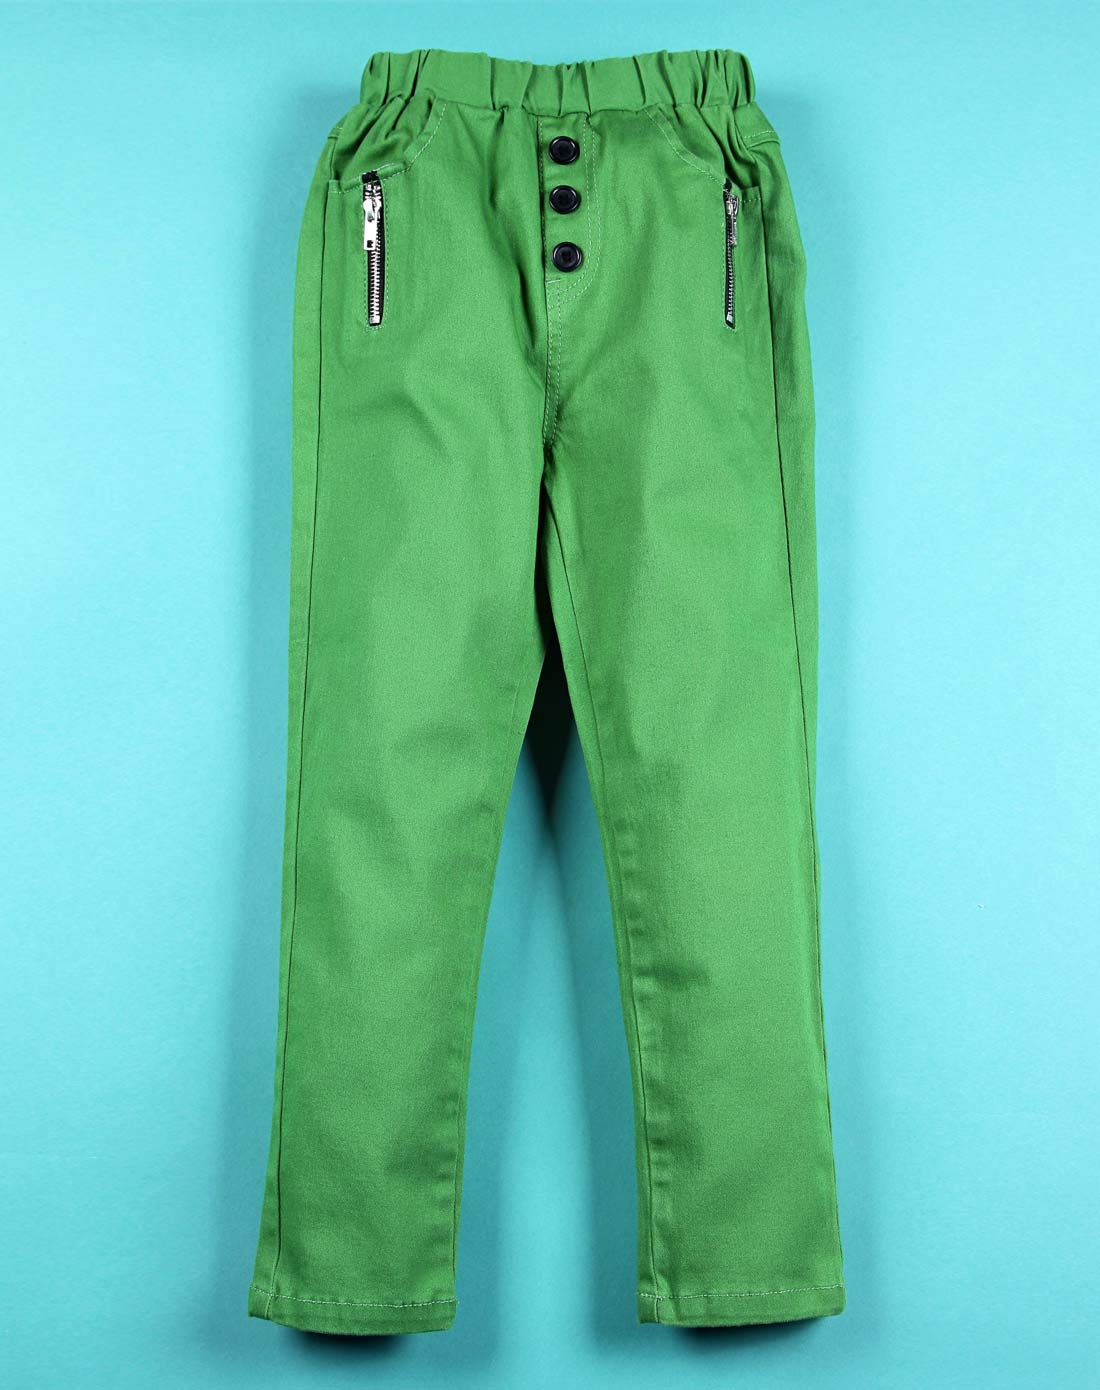 i.l boy 男童绿色裤子